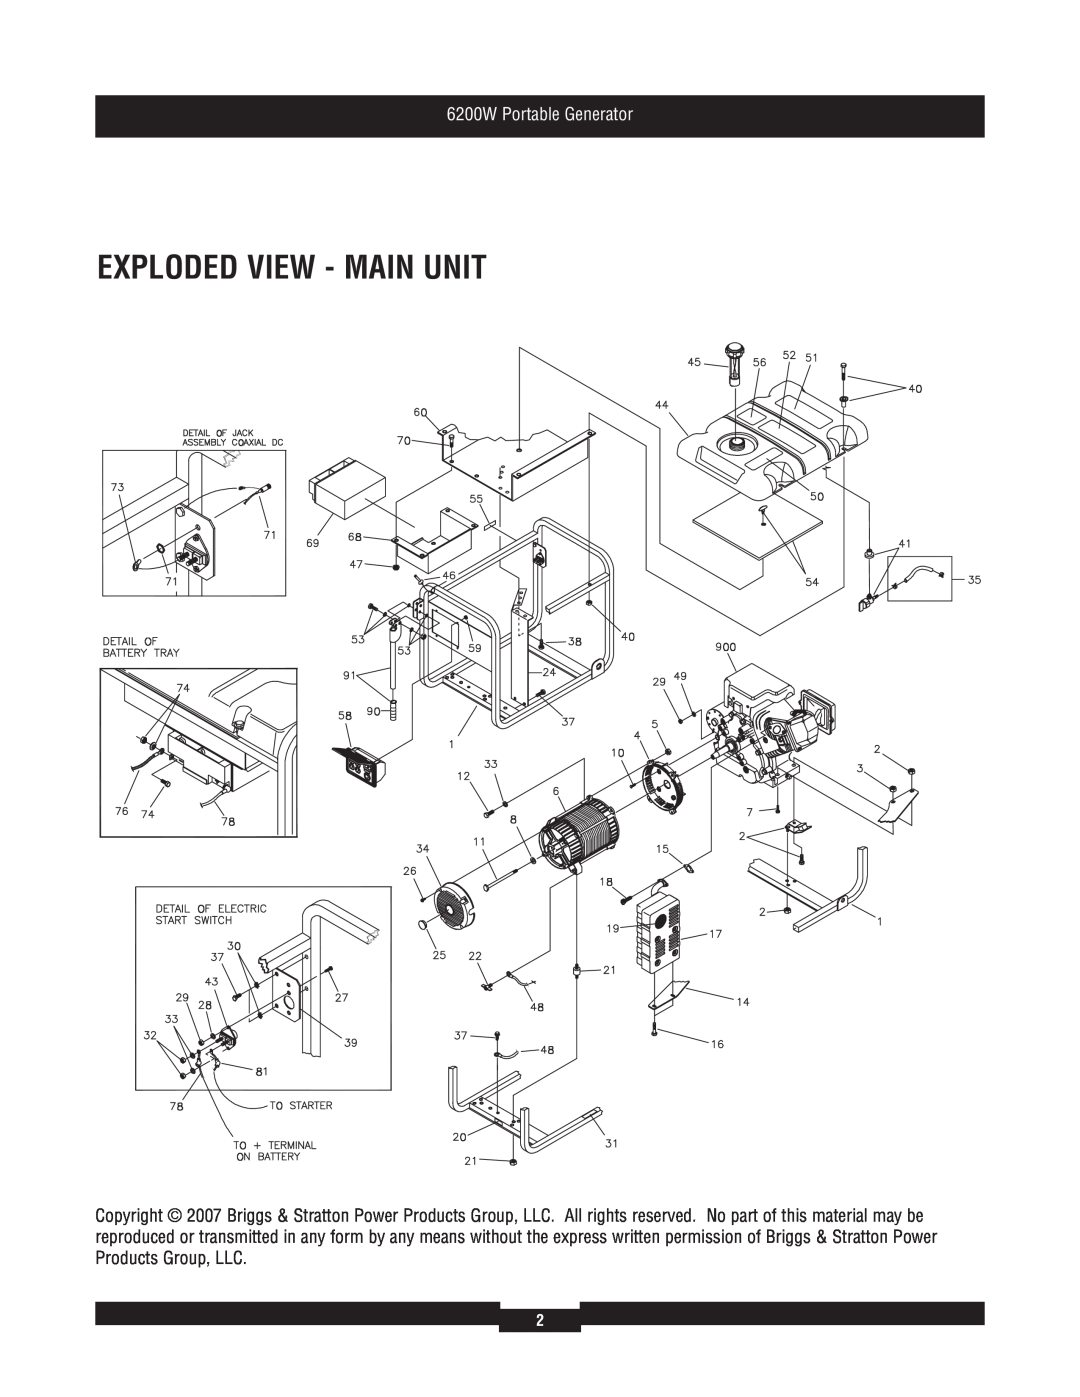 Briggs & Stratton 30386 manual Exploded View - Main Unit, 6200W Portable Generator 